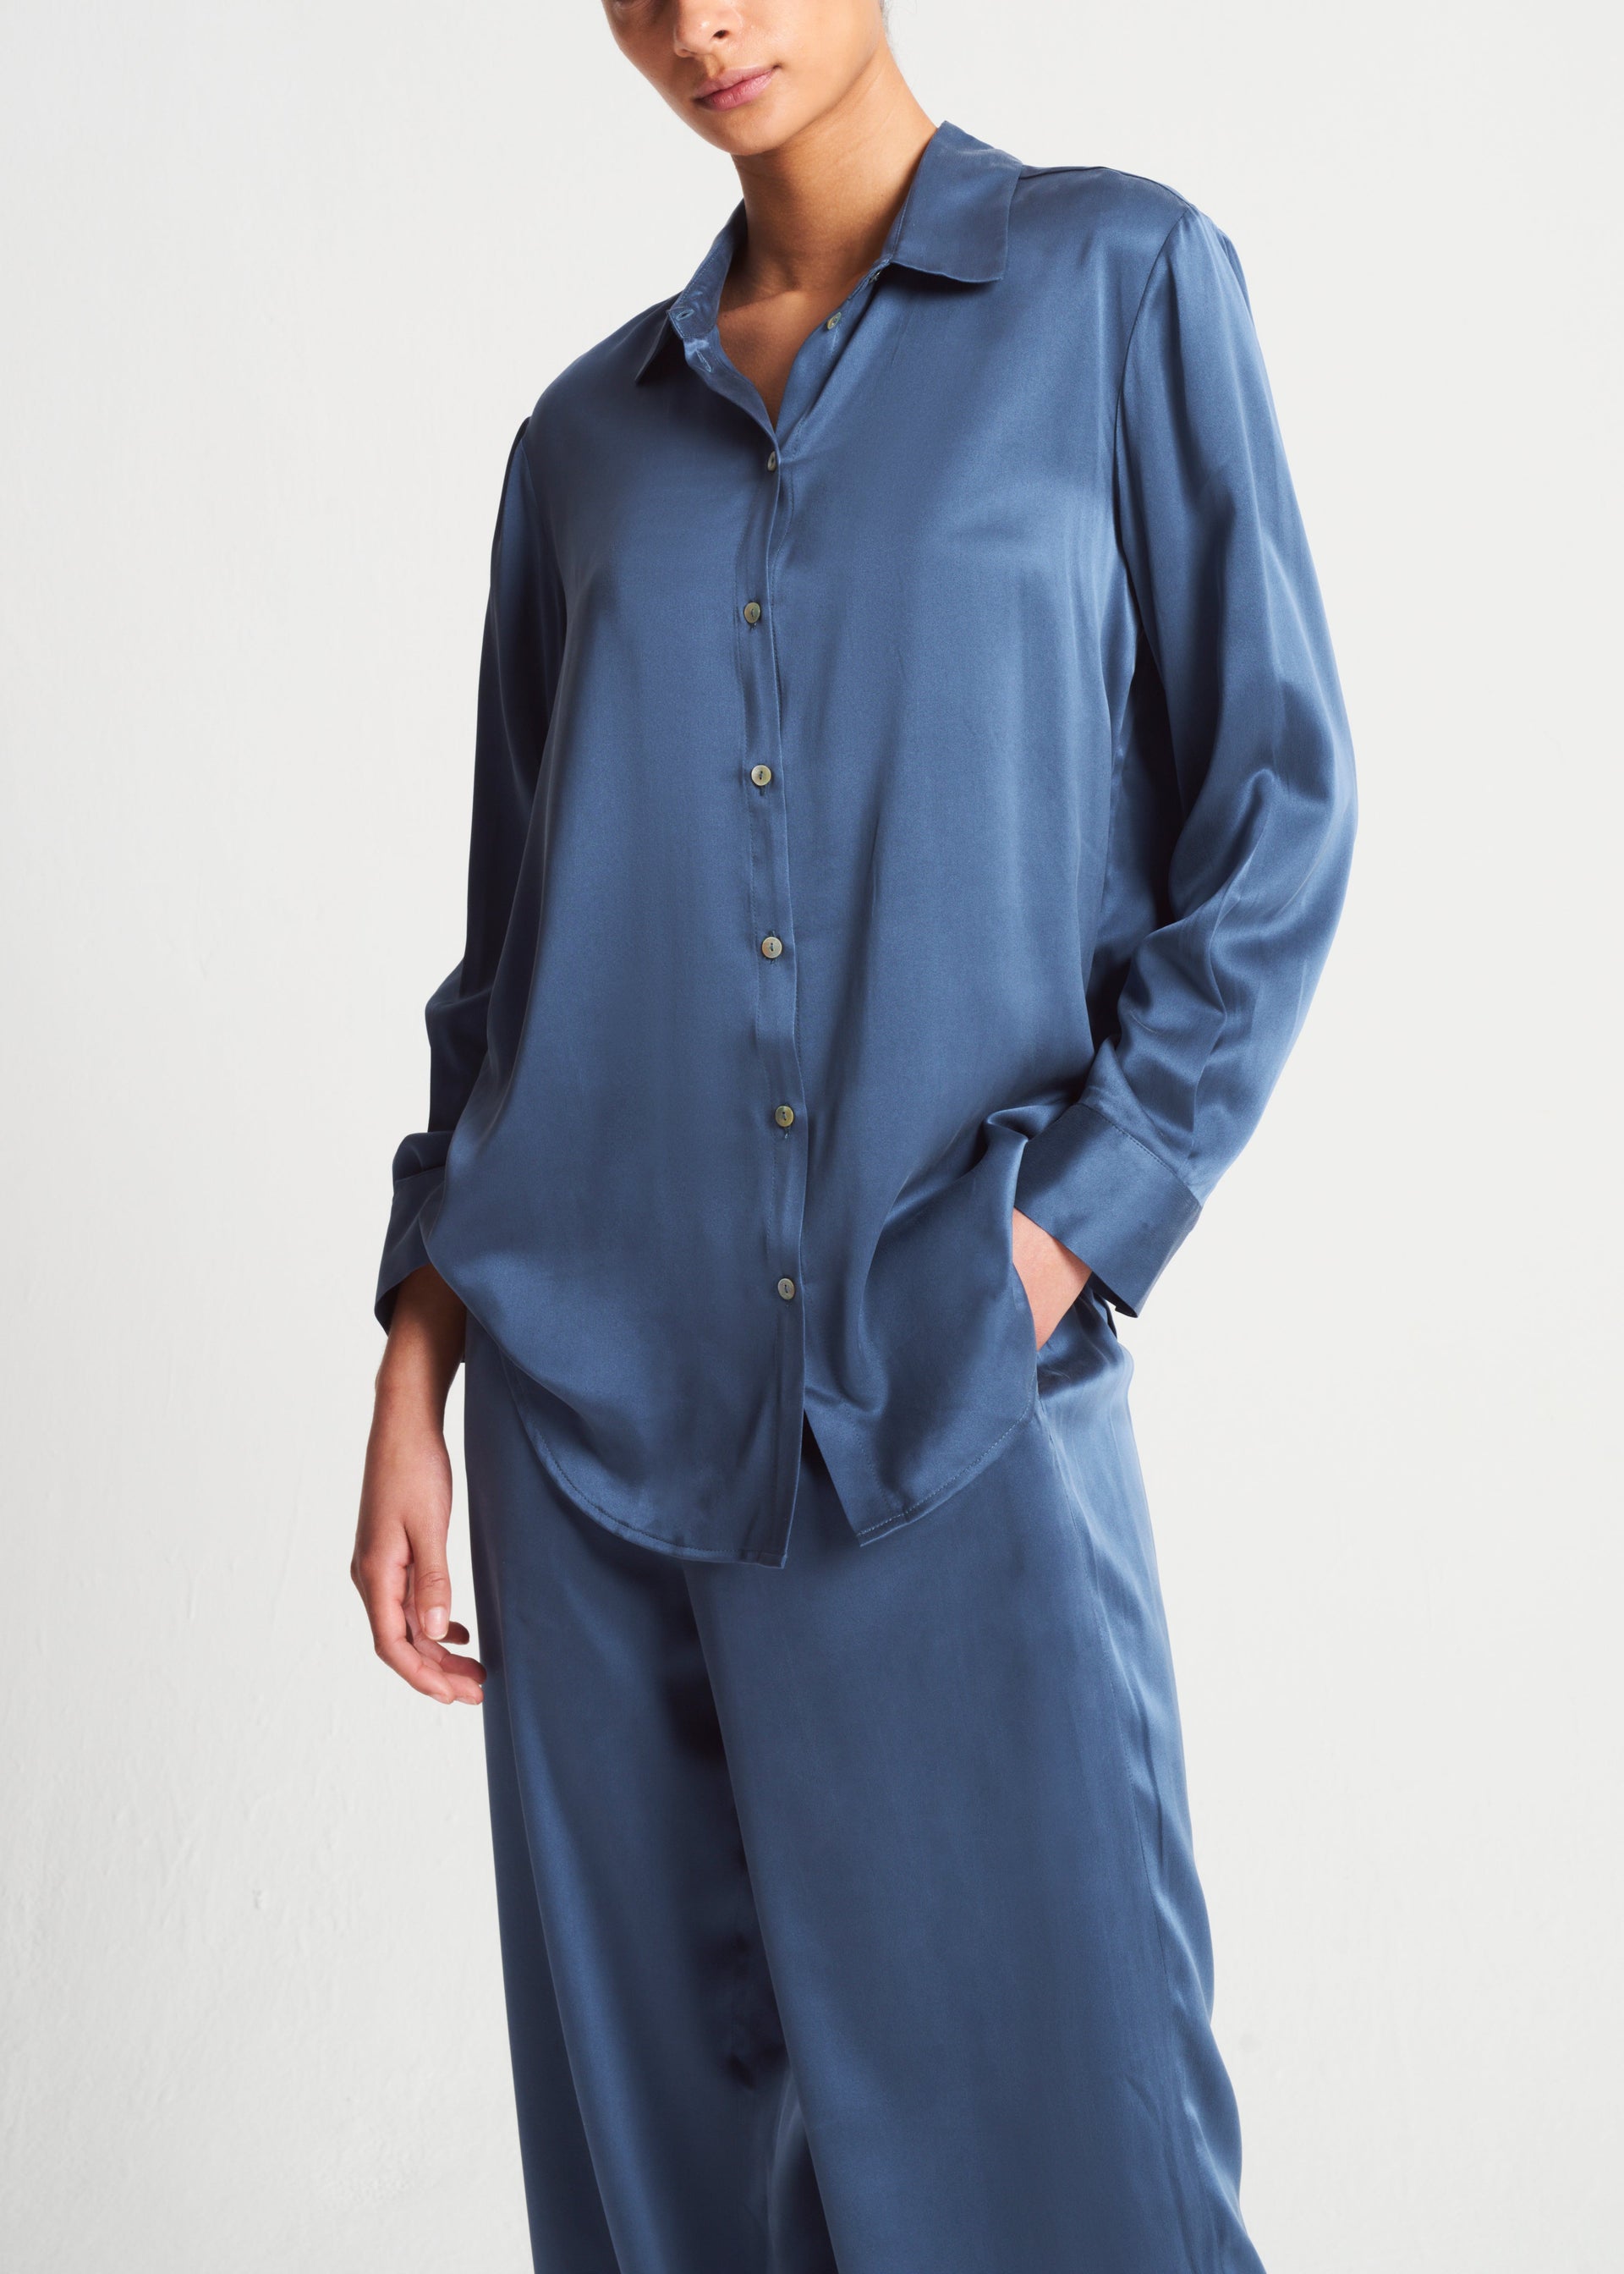 London Steel Blue Silk Charmeuse Pyjama Top